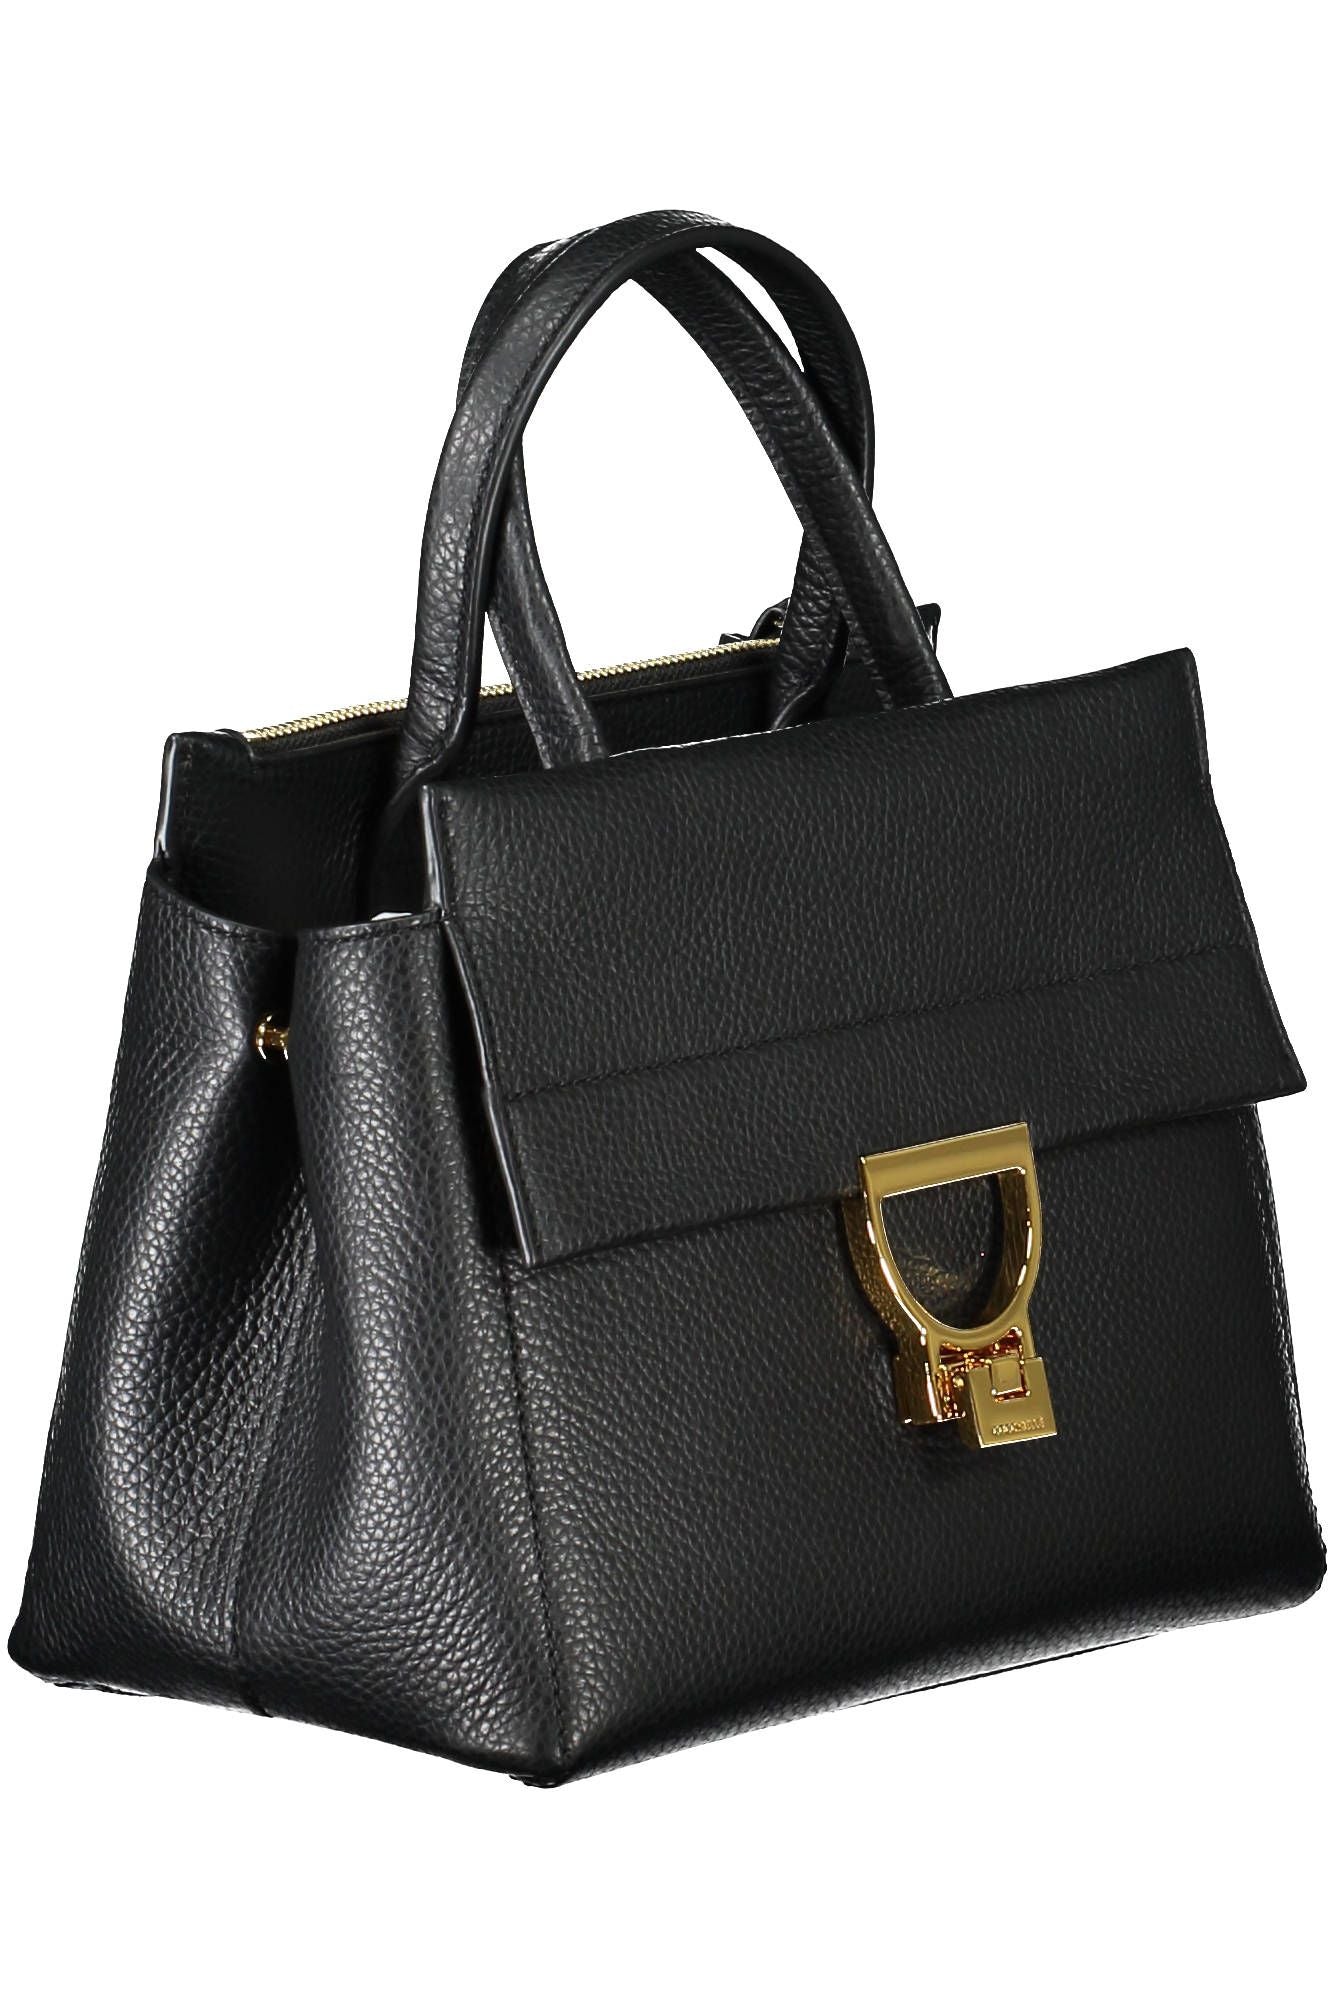 Coccinelle Elegant Black Leather Handbag With Versatile Straps